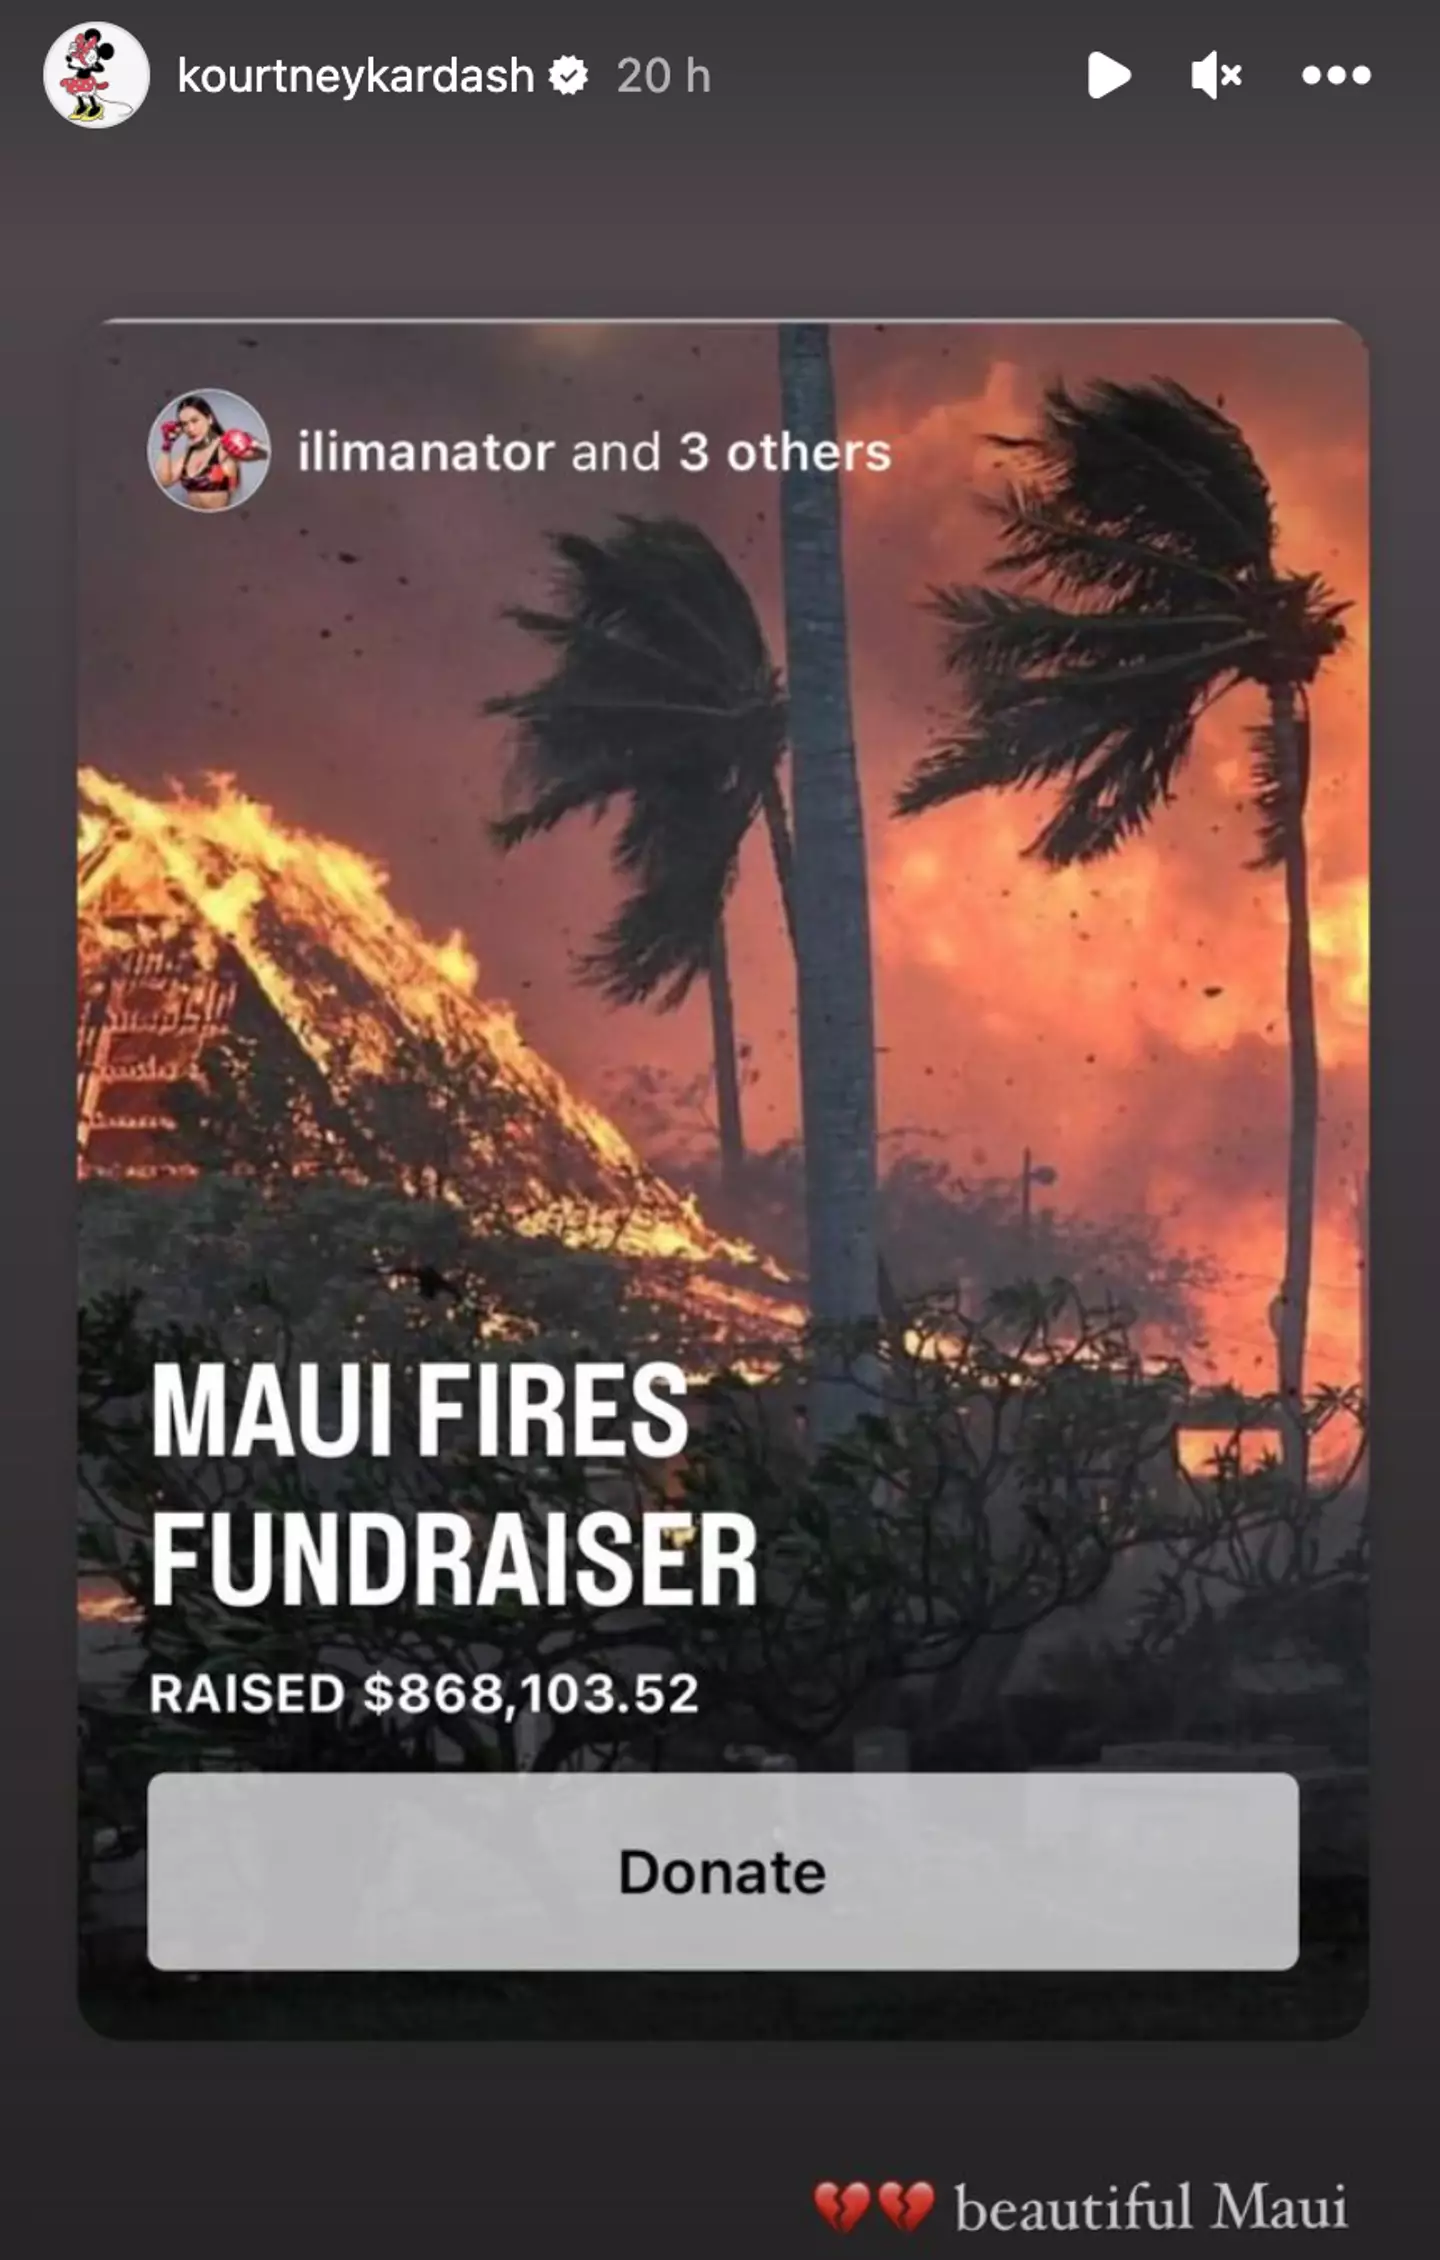 Kourtney shared a link to a Maui fundraiser on her Instagram Story.